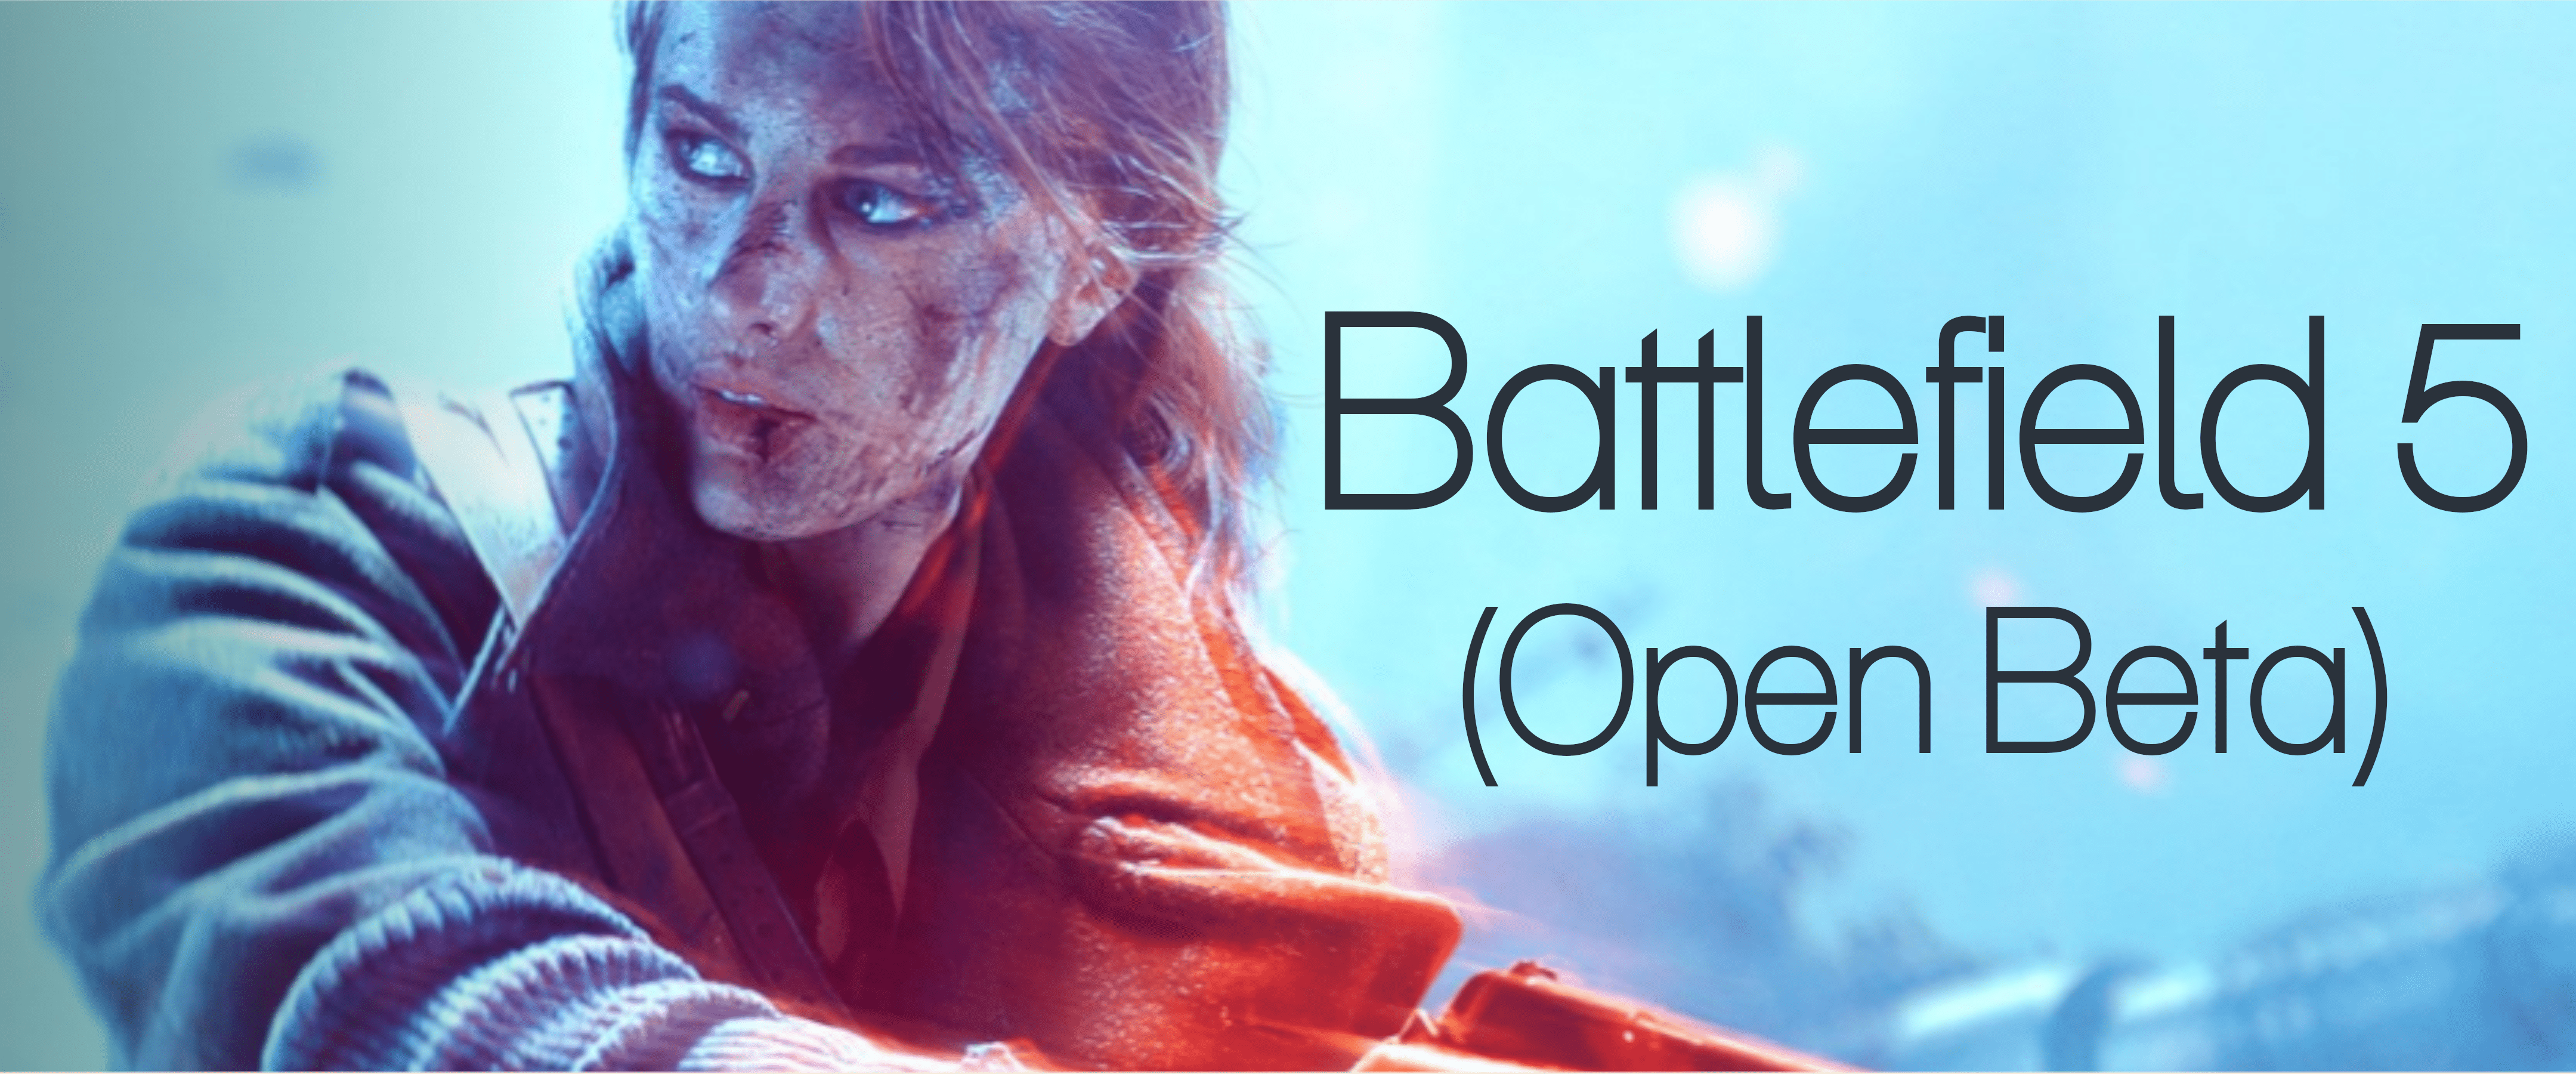 Battlefield 5 (Open Beta) 6